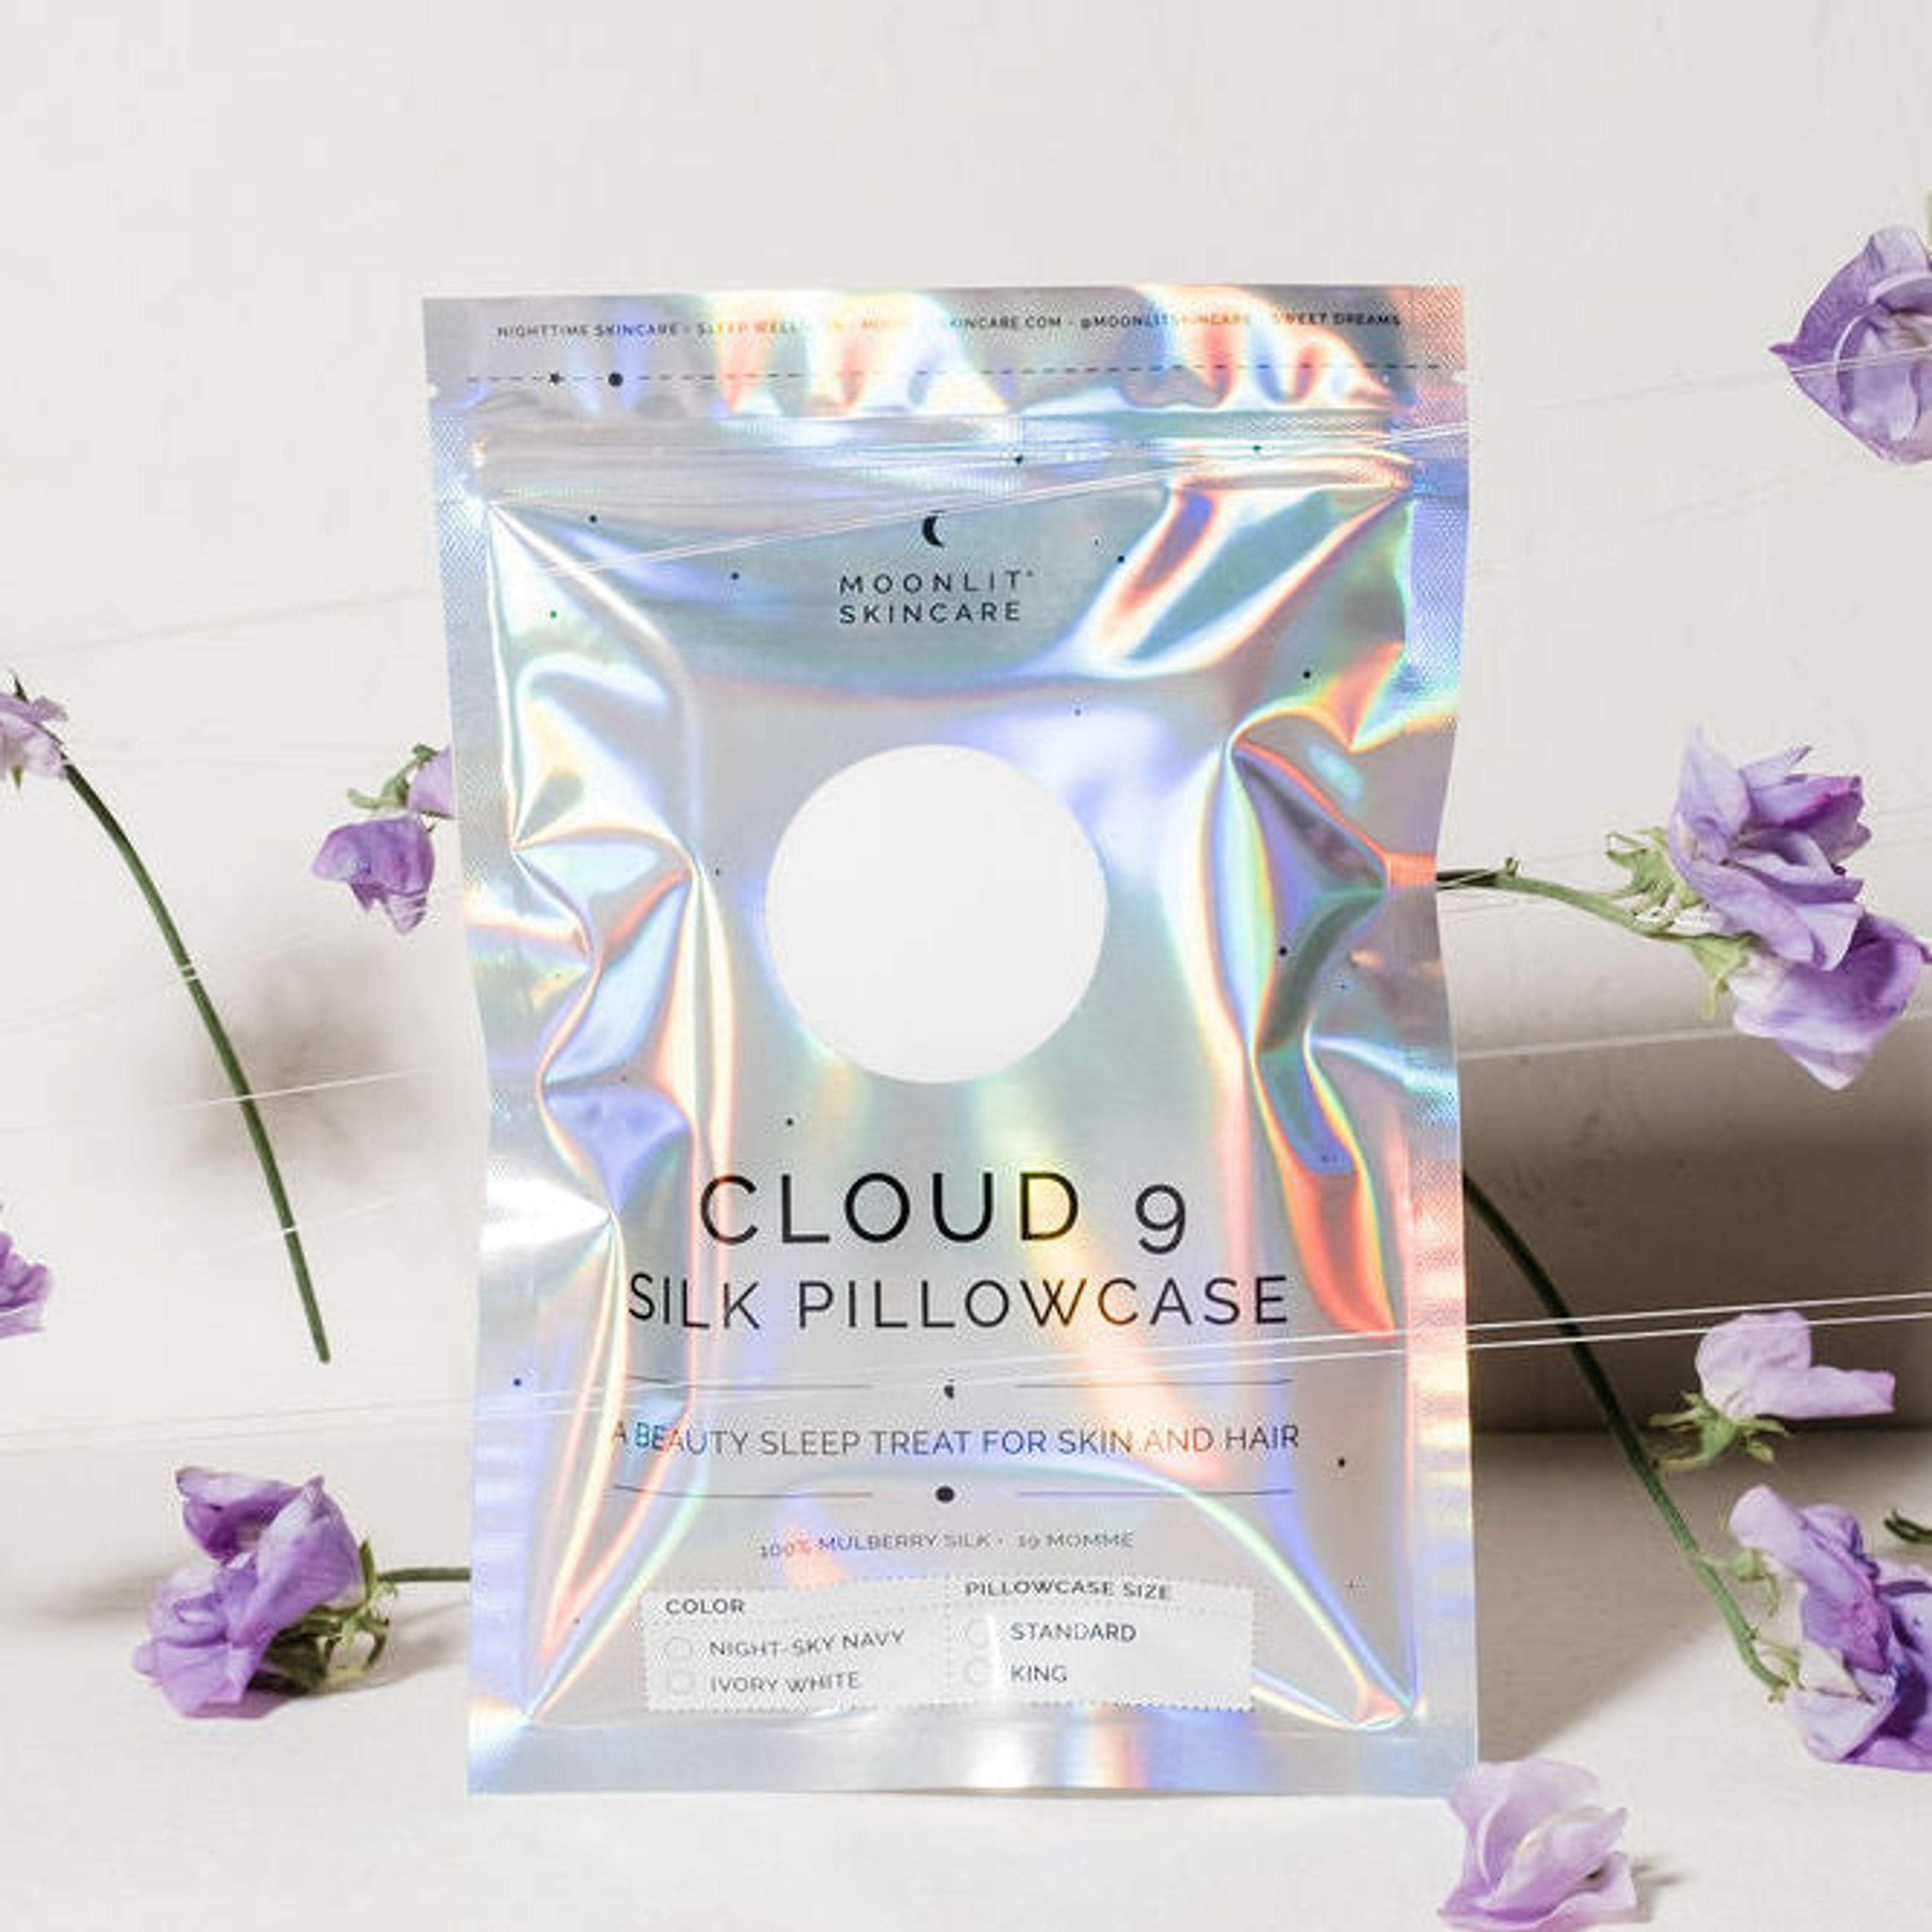 Cloud 9 Silk Pillowcase (Ivory White)